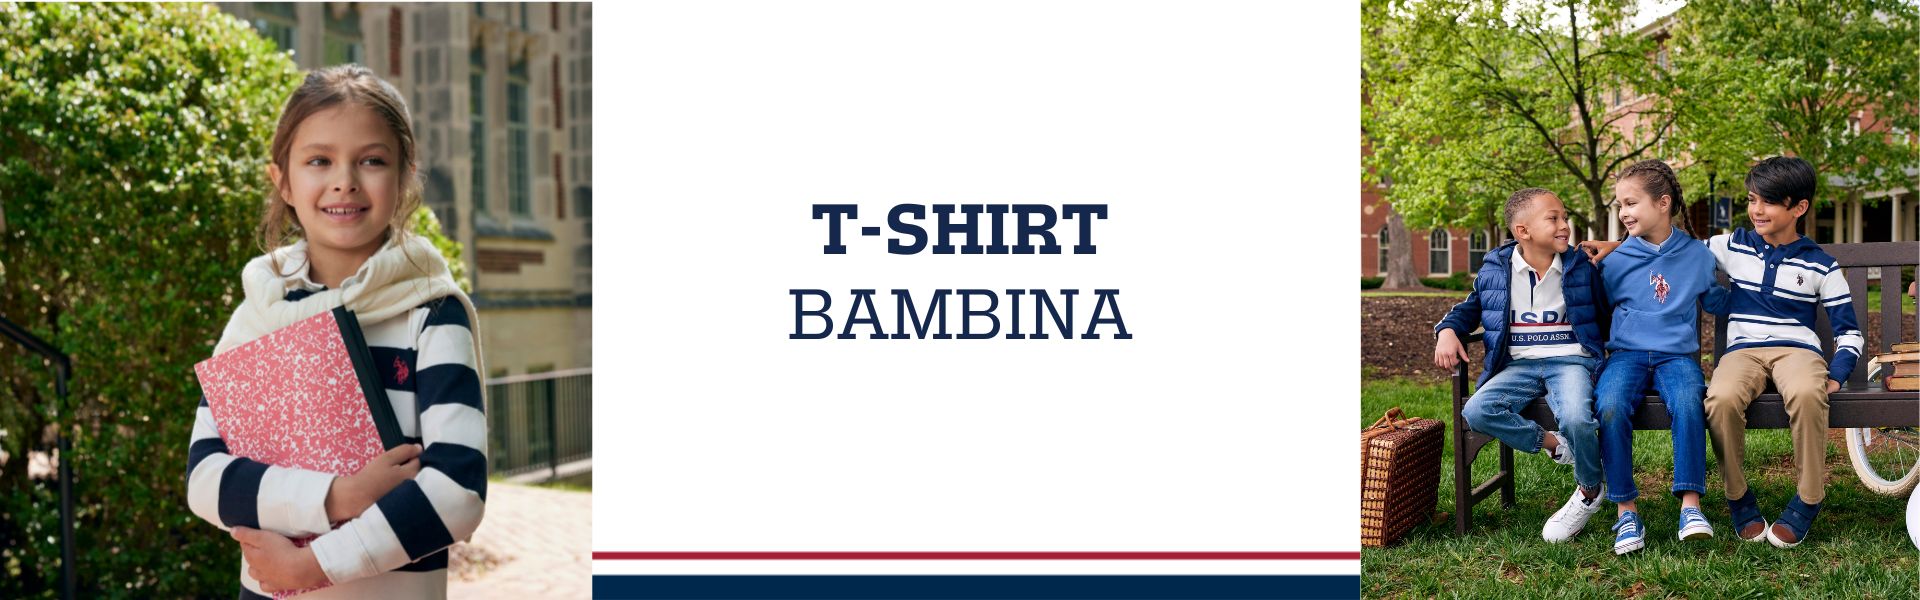 T-SHIRT BAMBINA